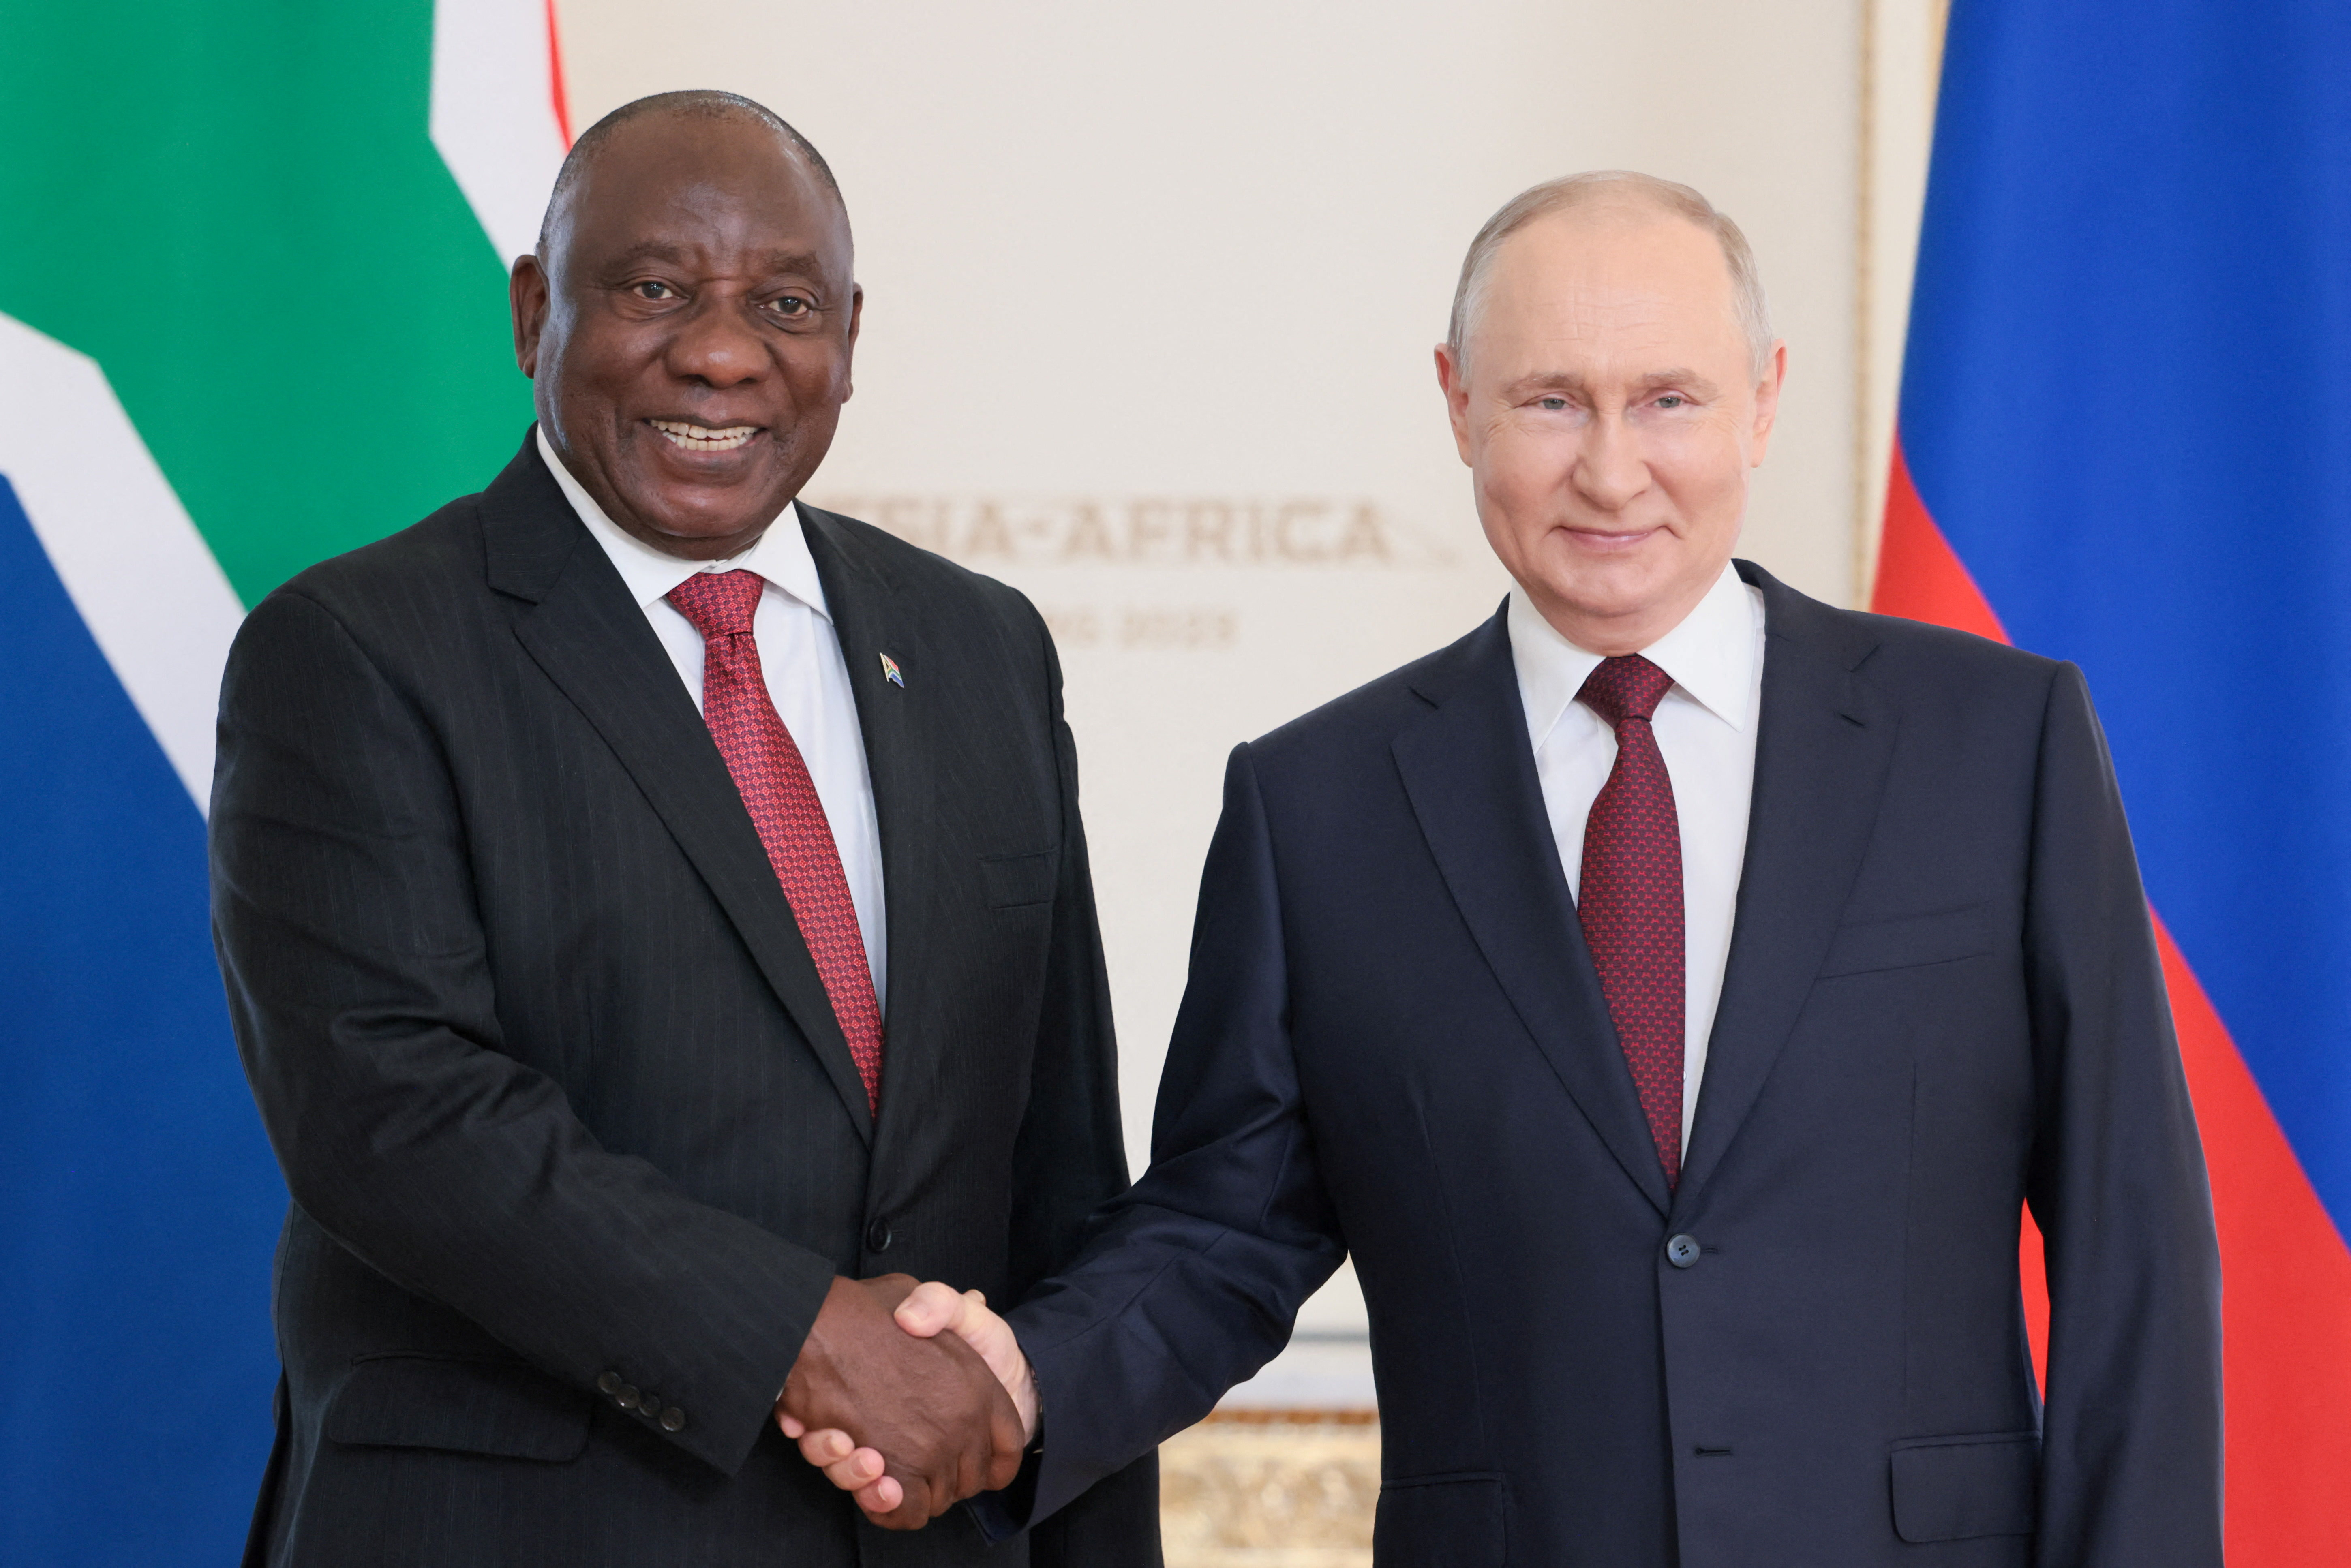 Russian President Putin meets South African President Ramaphosa in St Petersburg